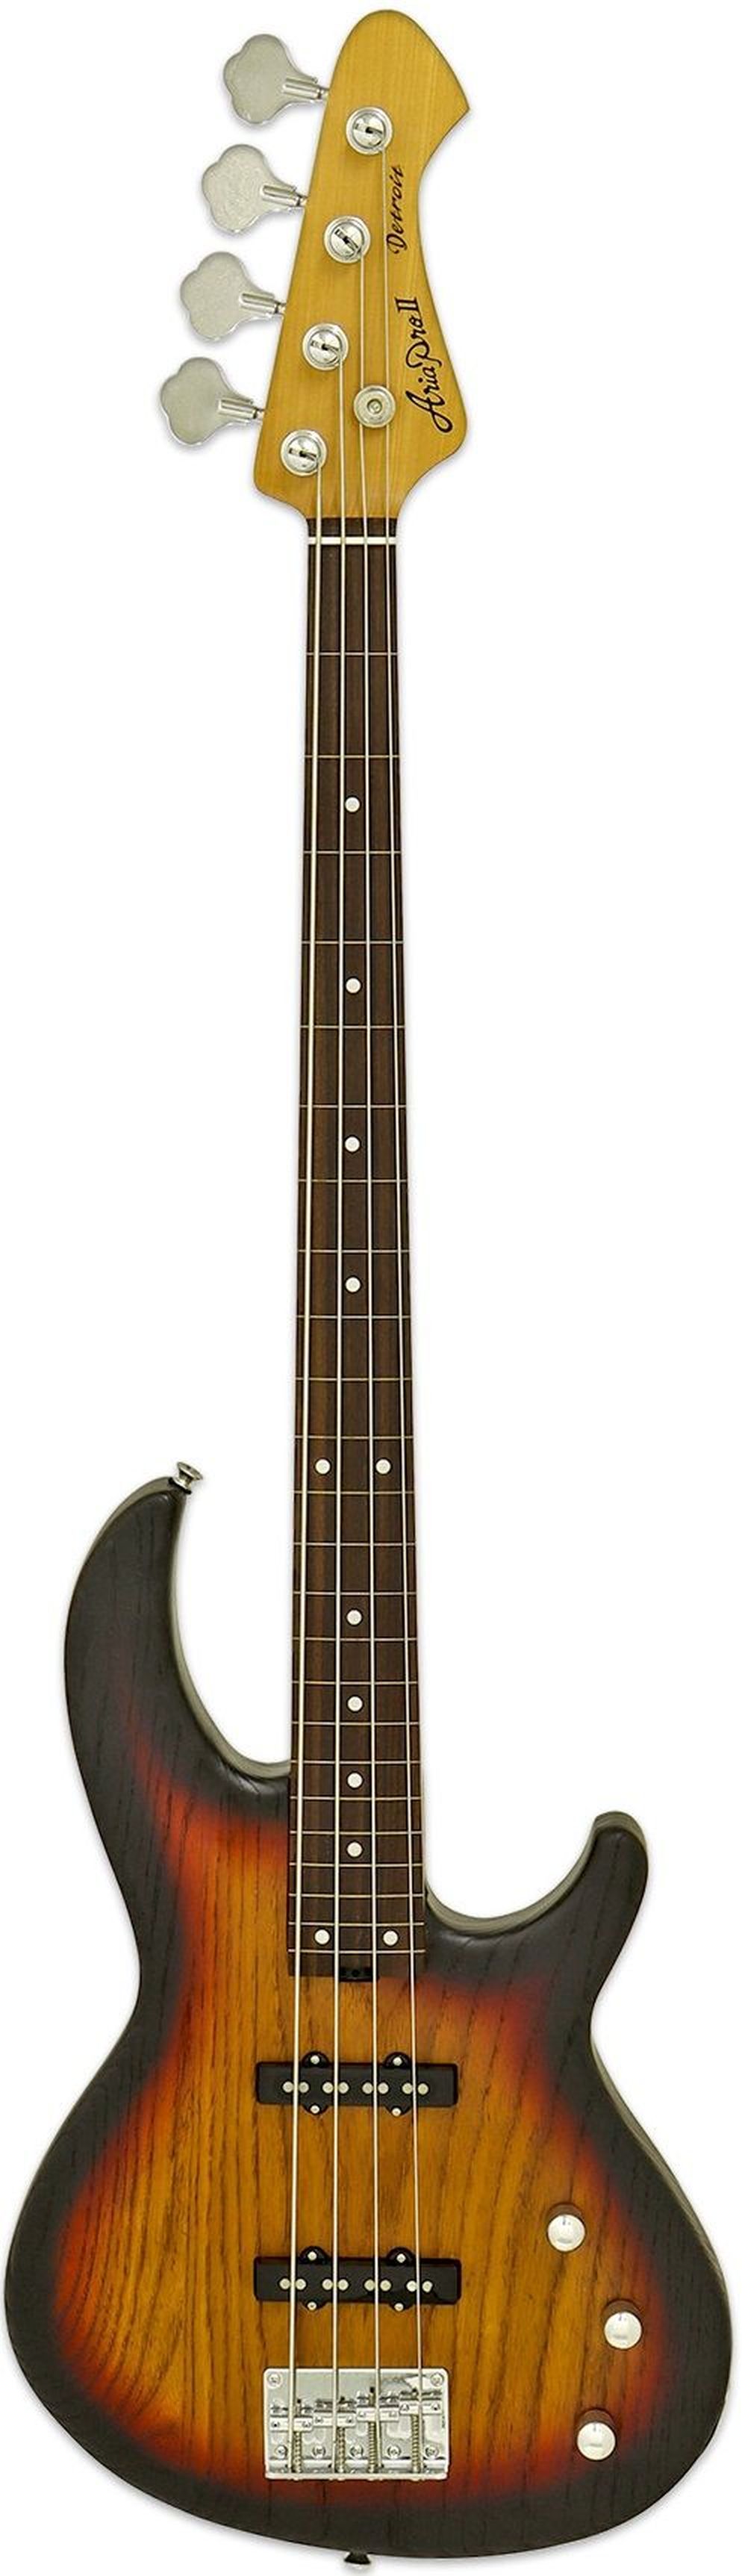 Бас-гитара Aria Pro II 313-JP OPSB, 4 струны, 24 лада, корпус Ясень, гриф Клен